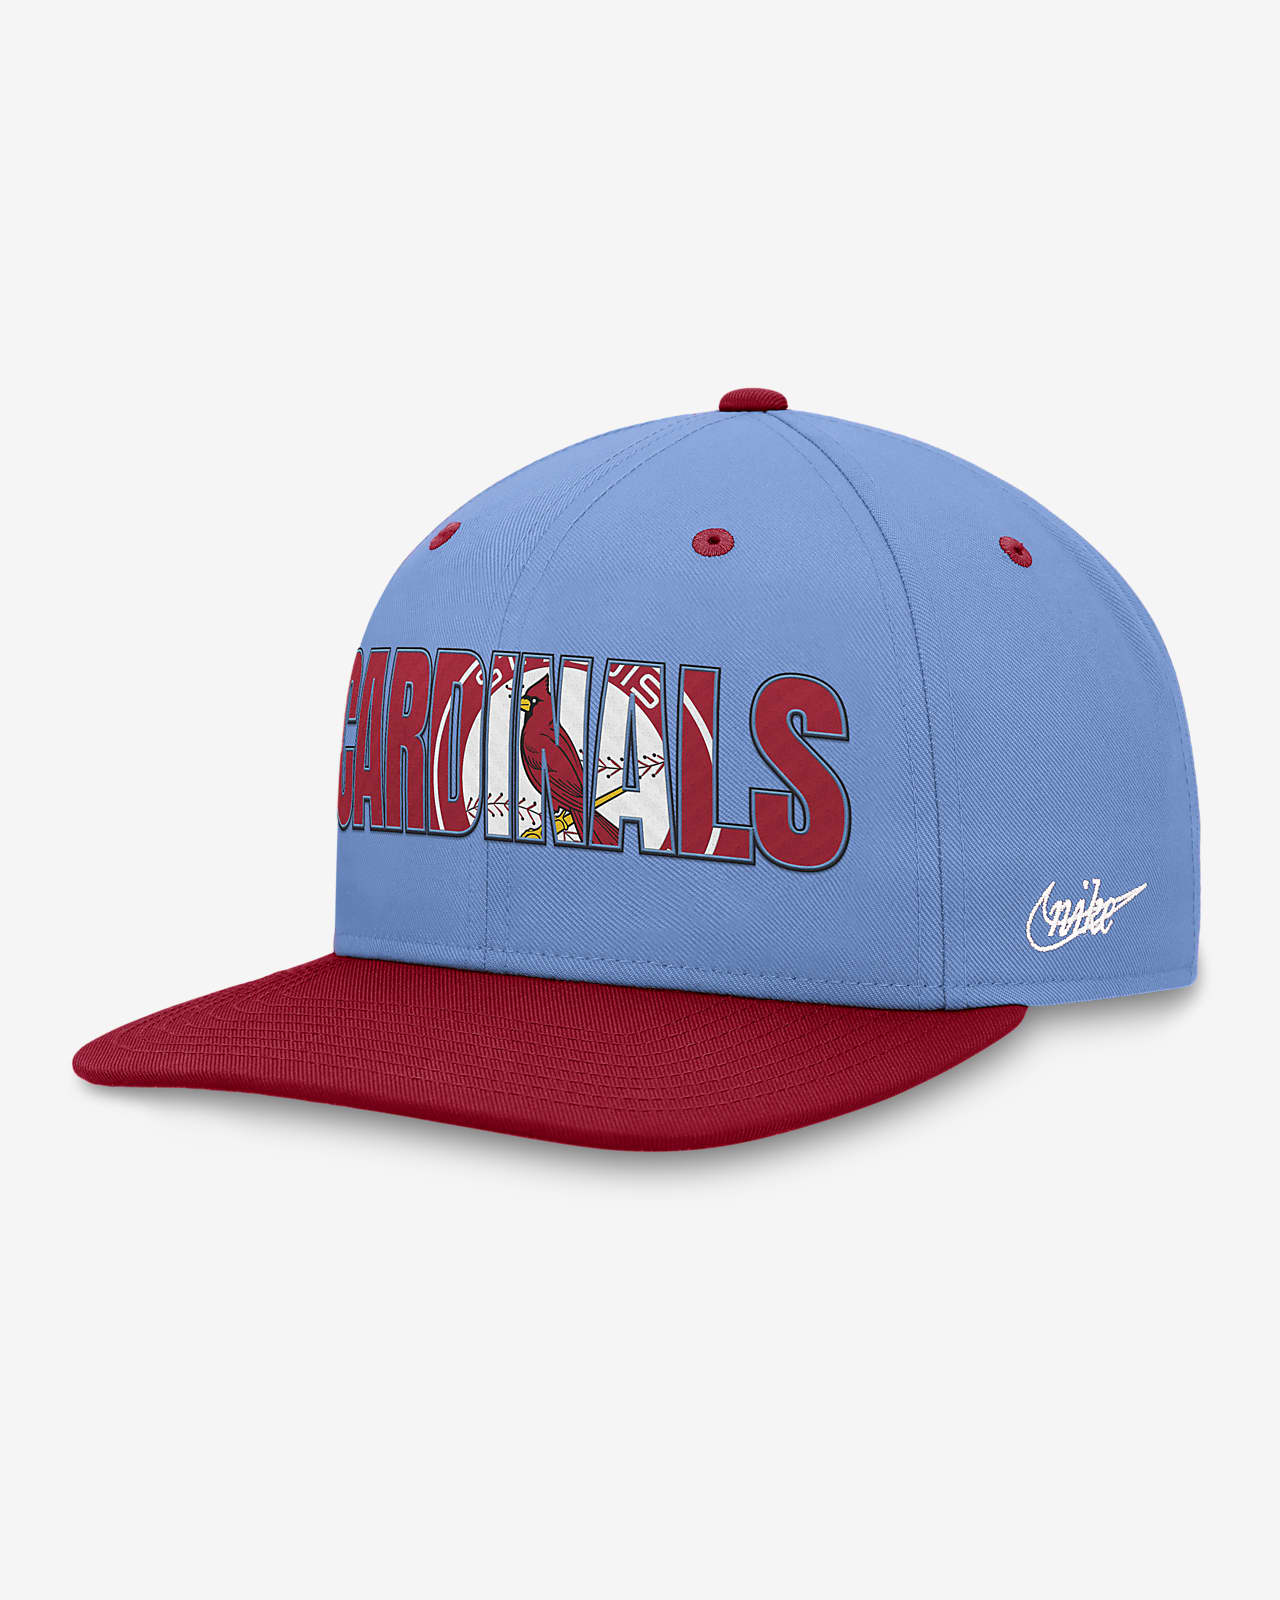 St. Louis Cardinals Pro Cooperstown Men's Nike MLB Adjustable Hat.